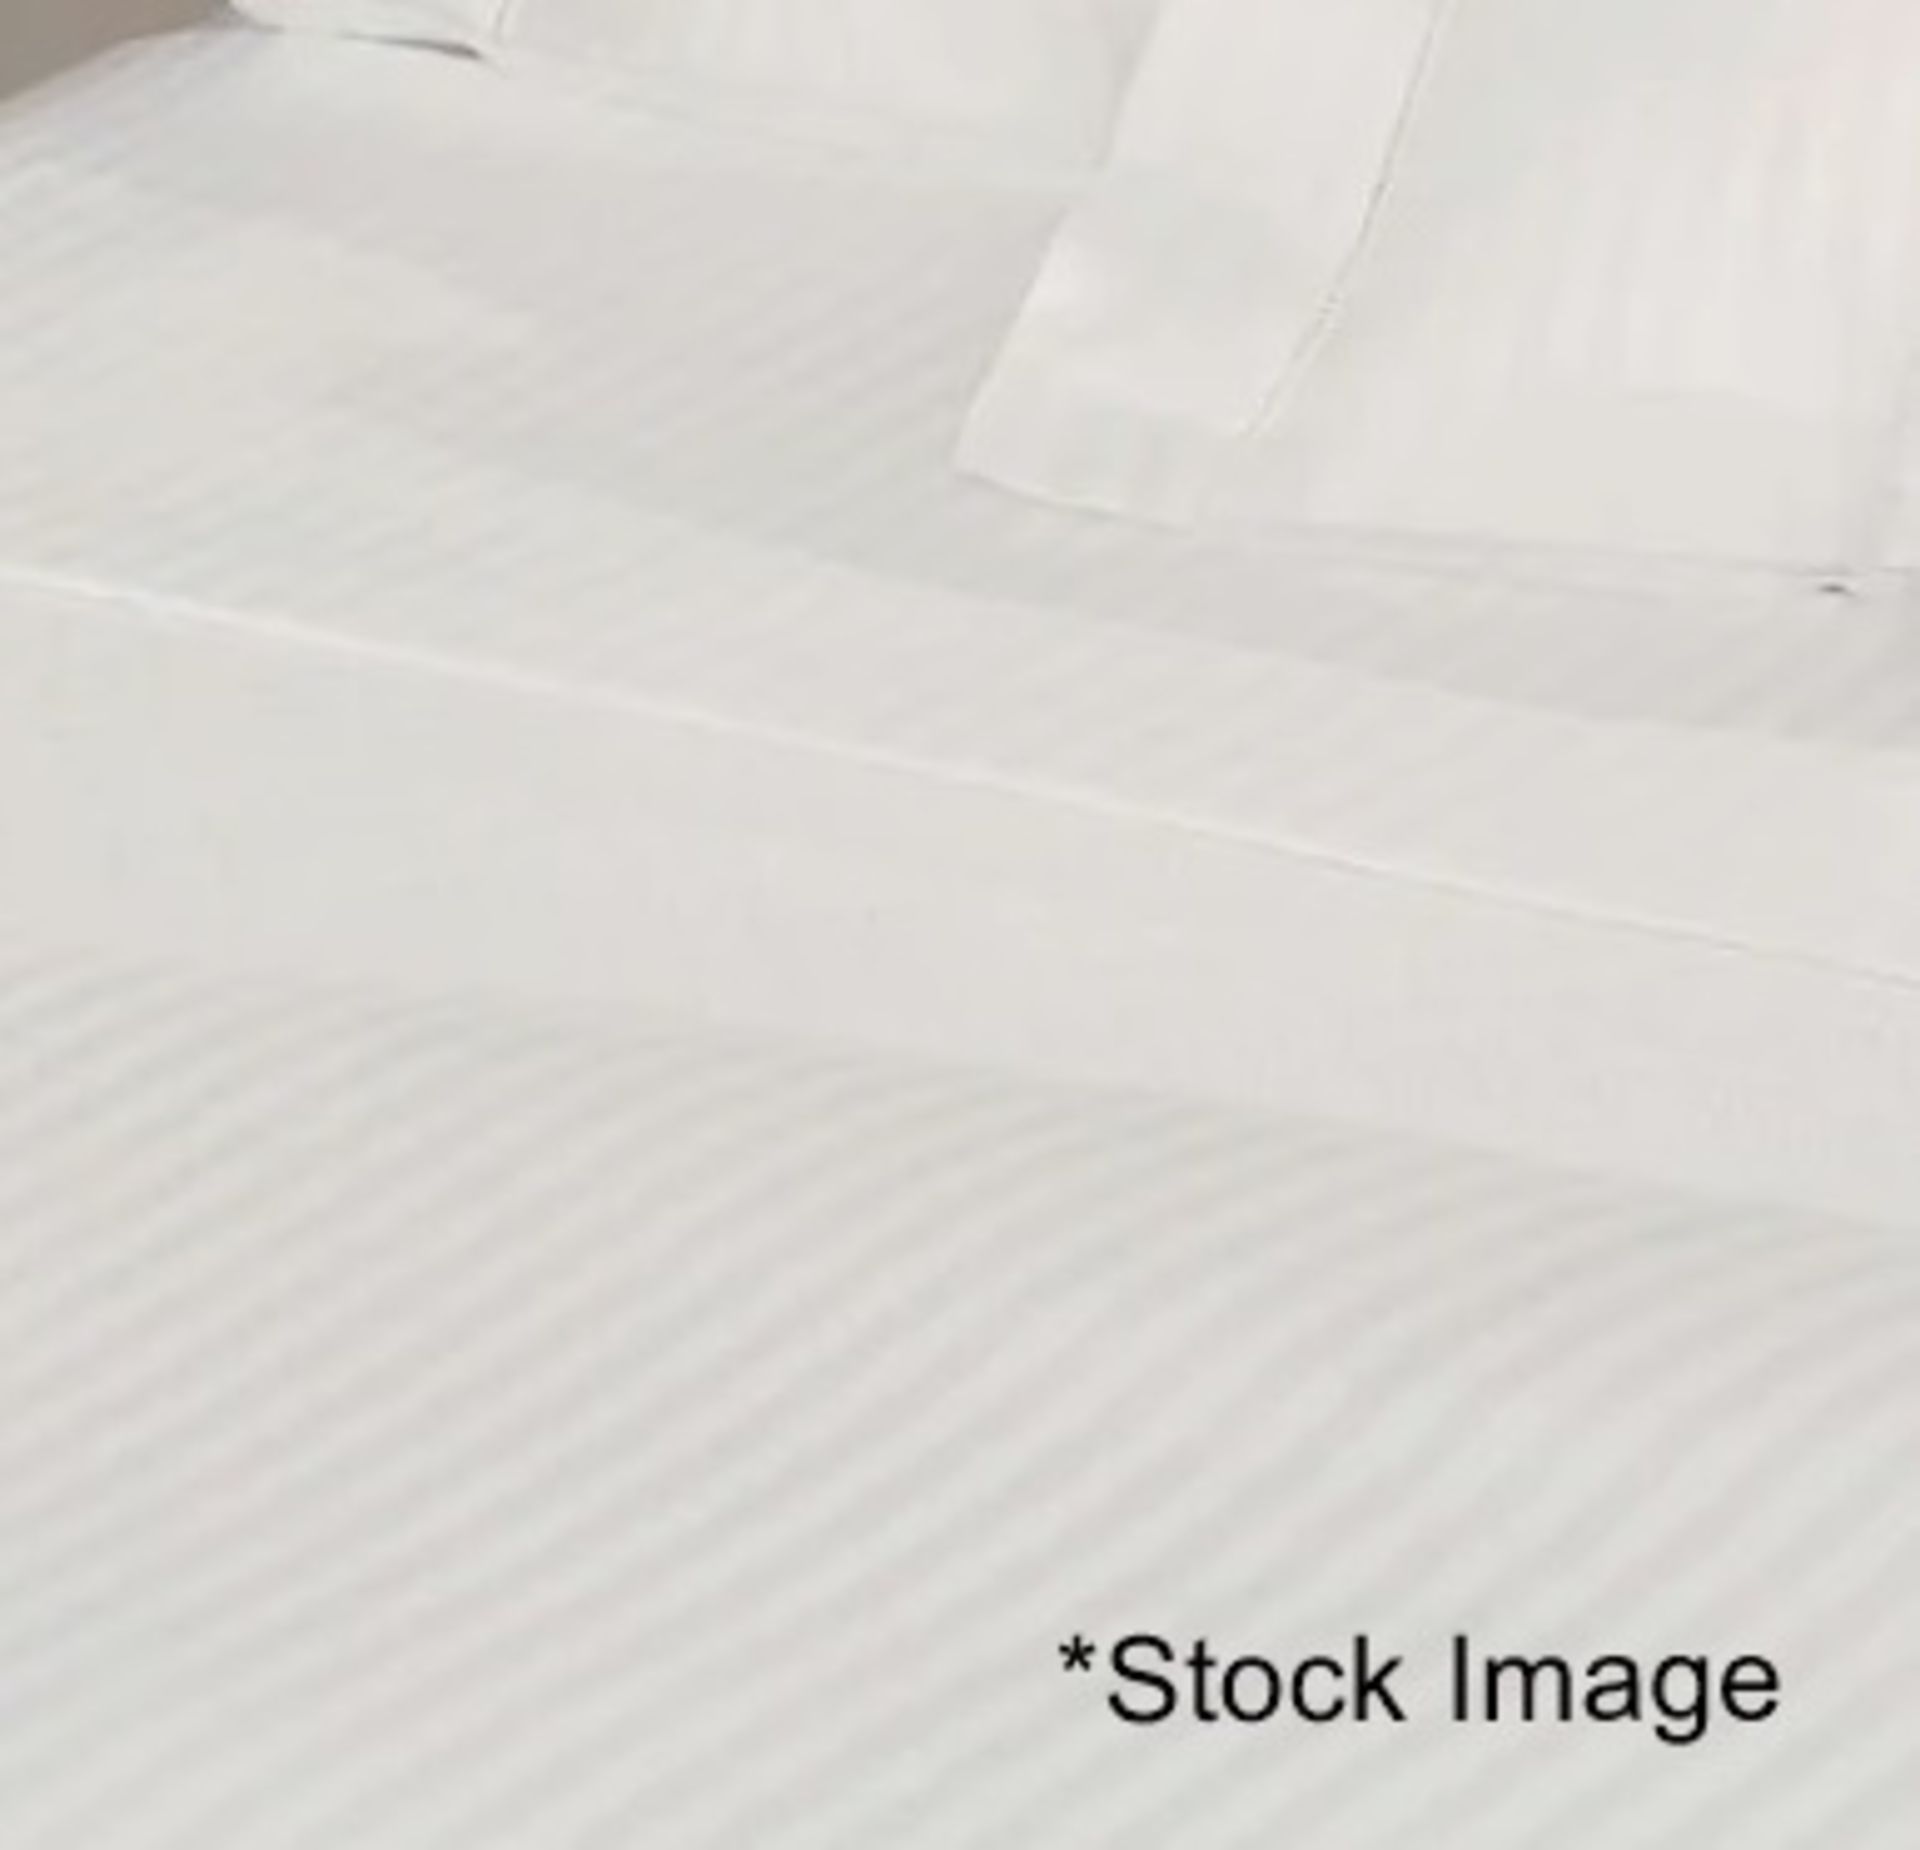 Pair Of PRATESI 'Raso Rigato' Luxury Italian Satin Pillow Shams In Off-White - RRP 50x75cm - £650.00 - Image 3 of 4